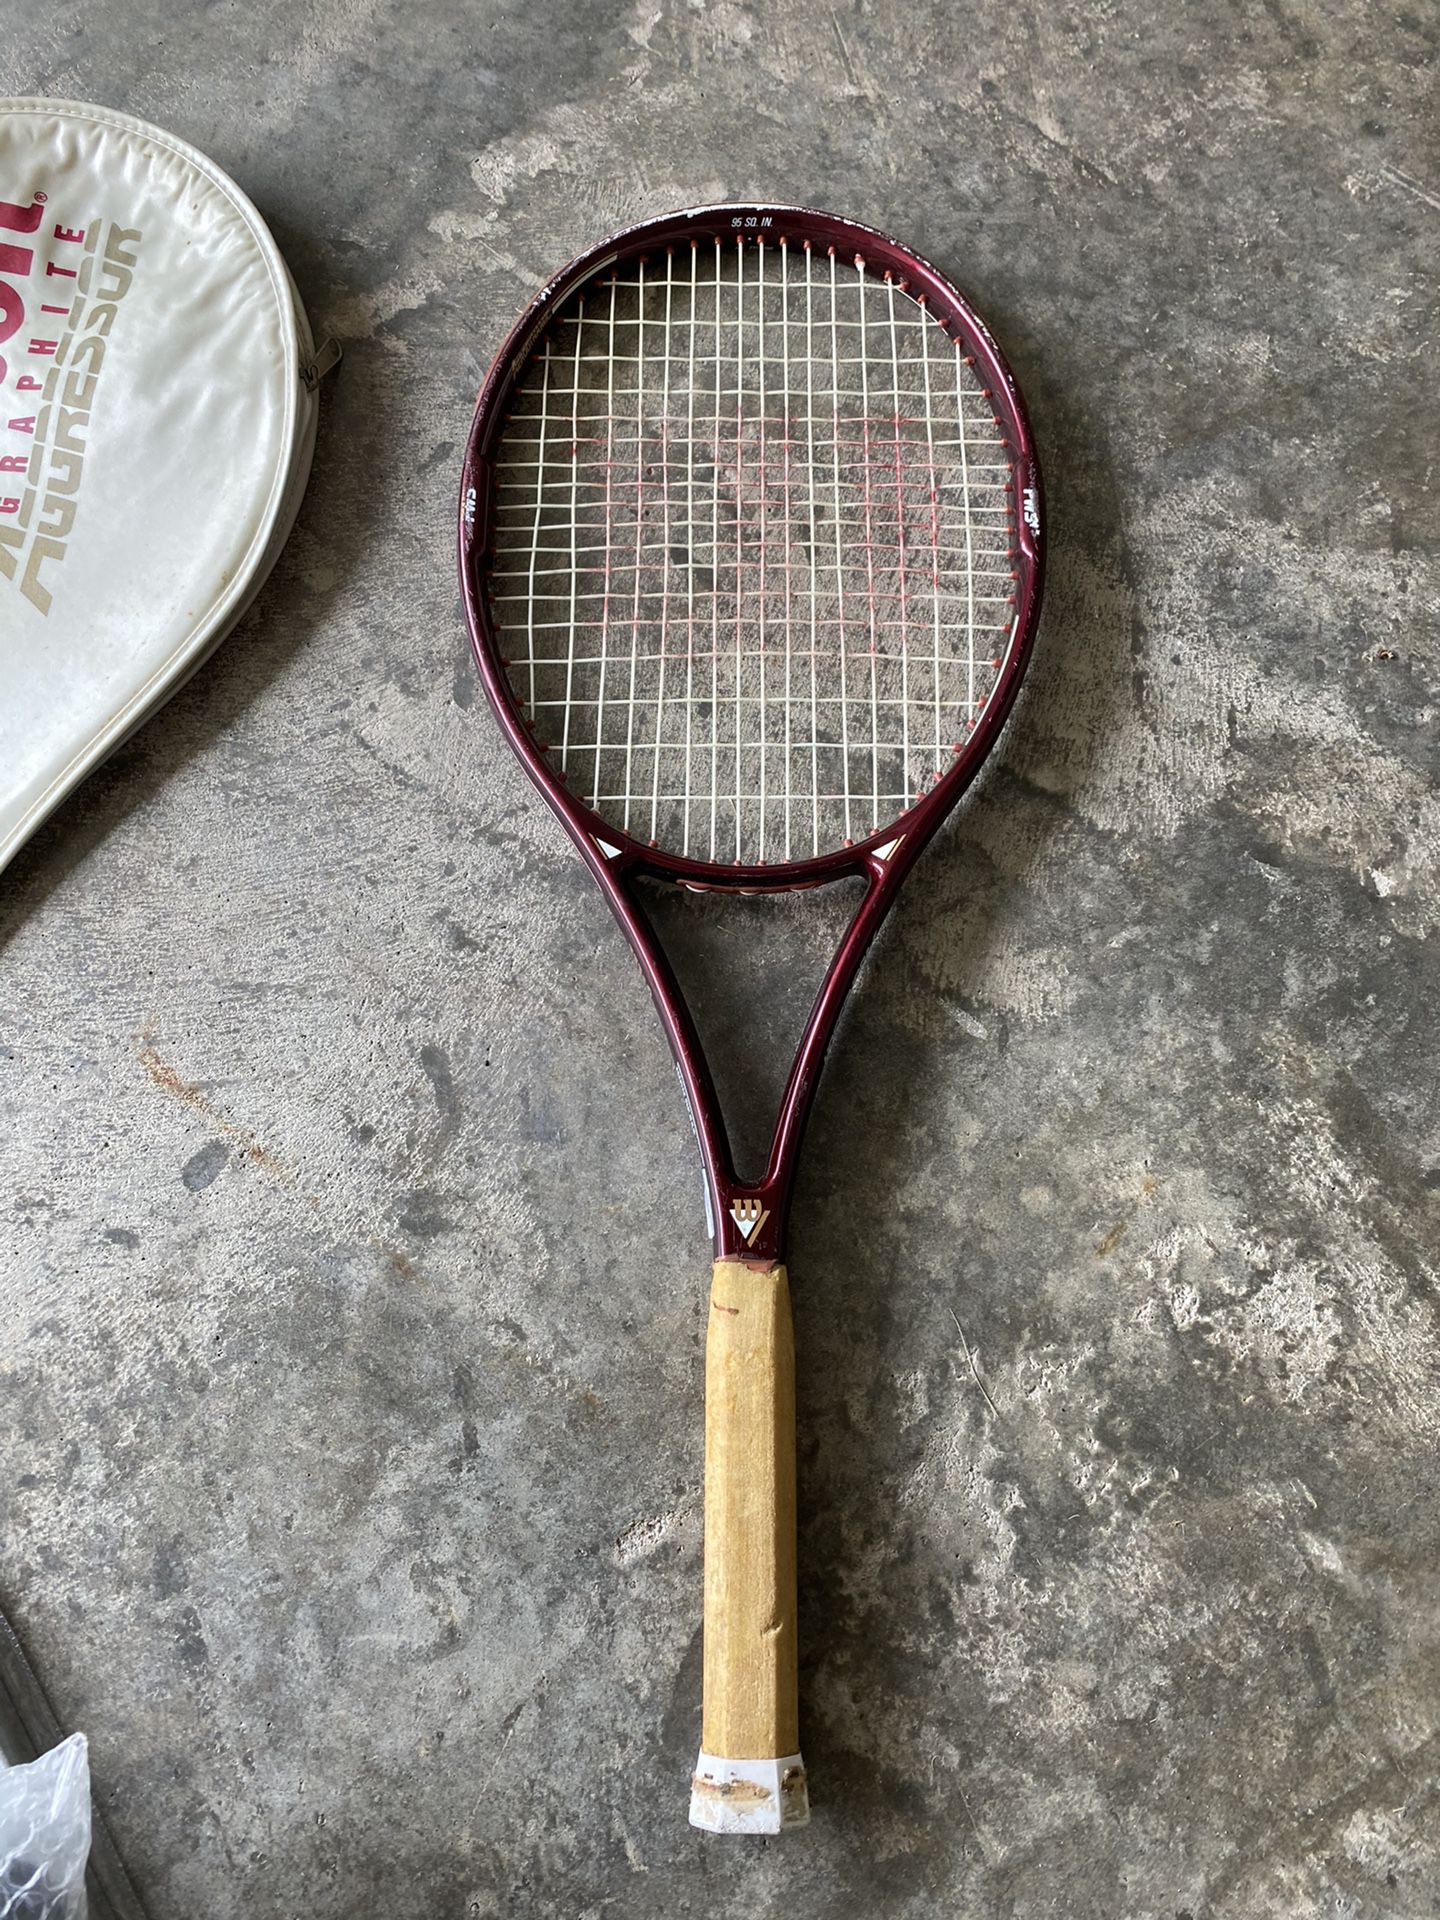 Tennis racket - worn - $10